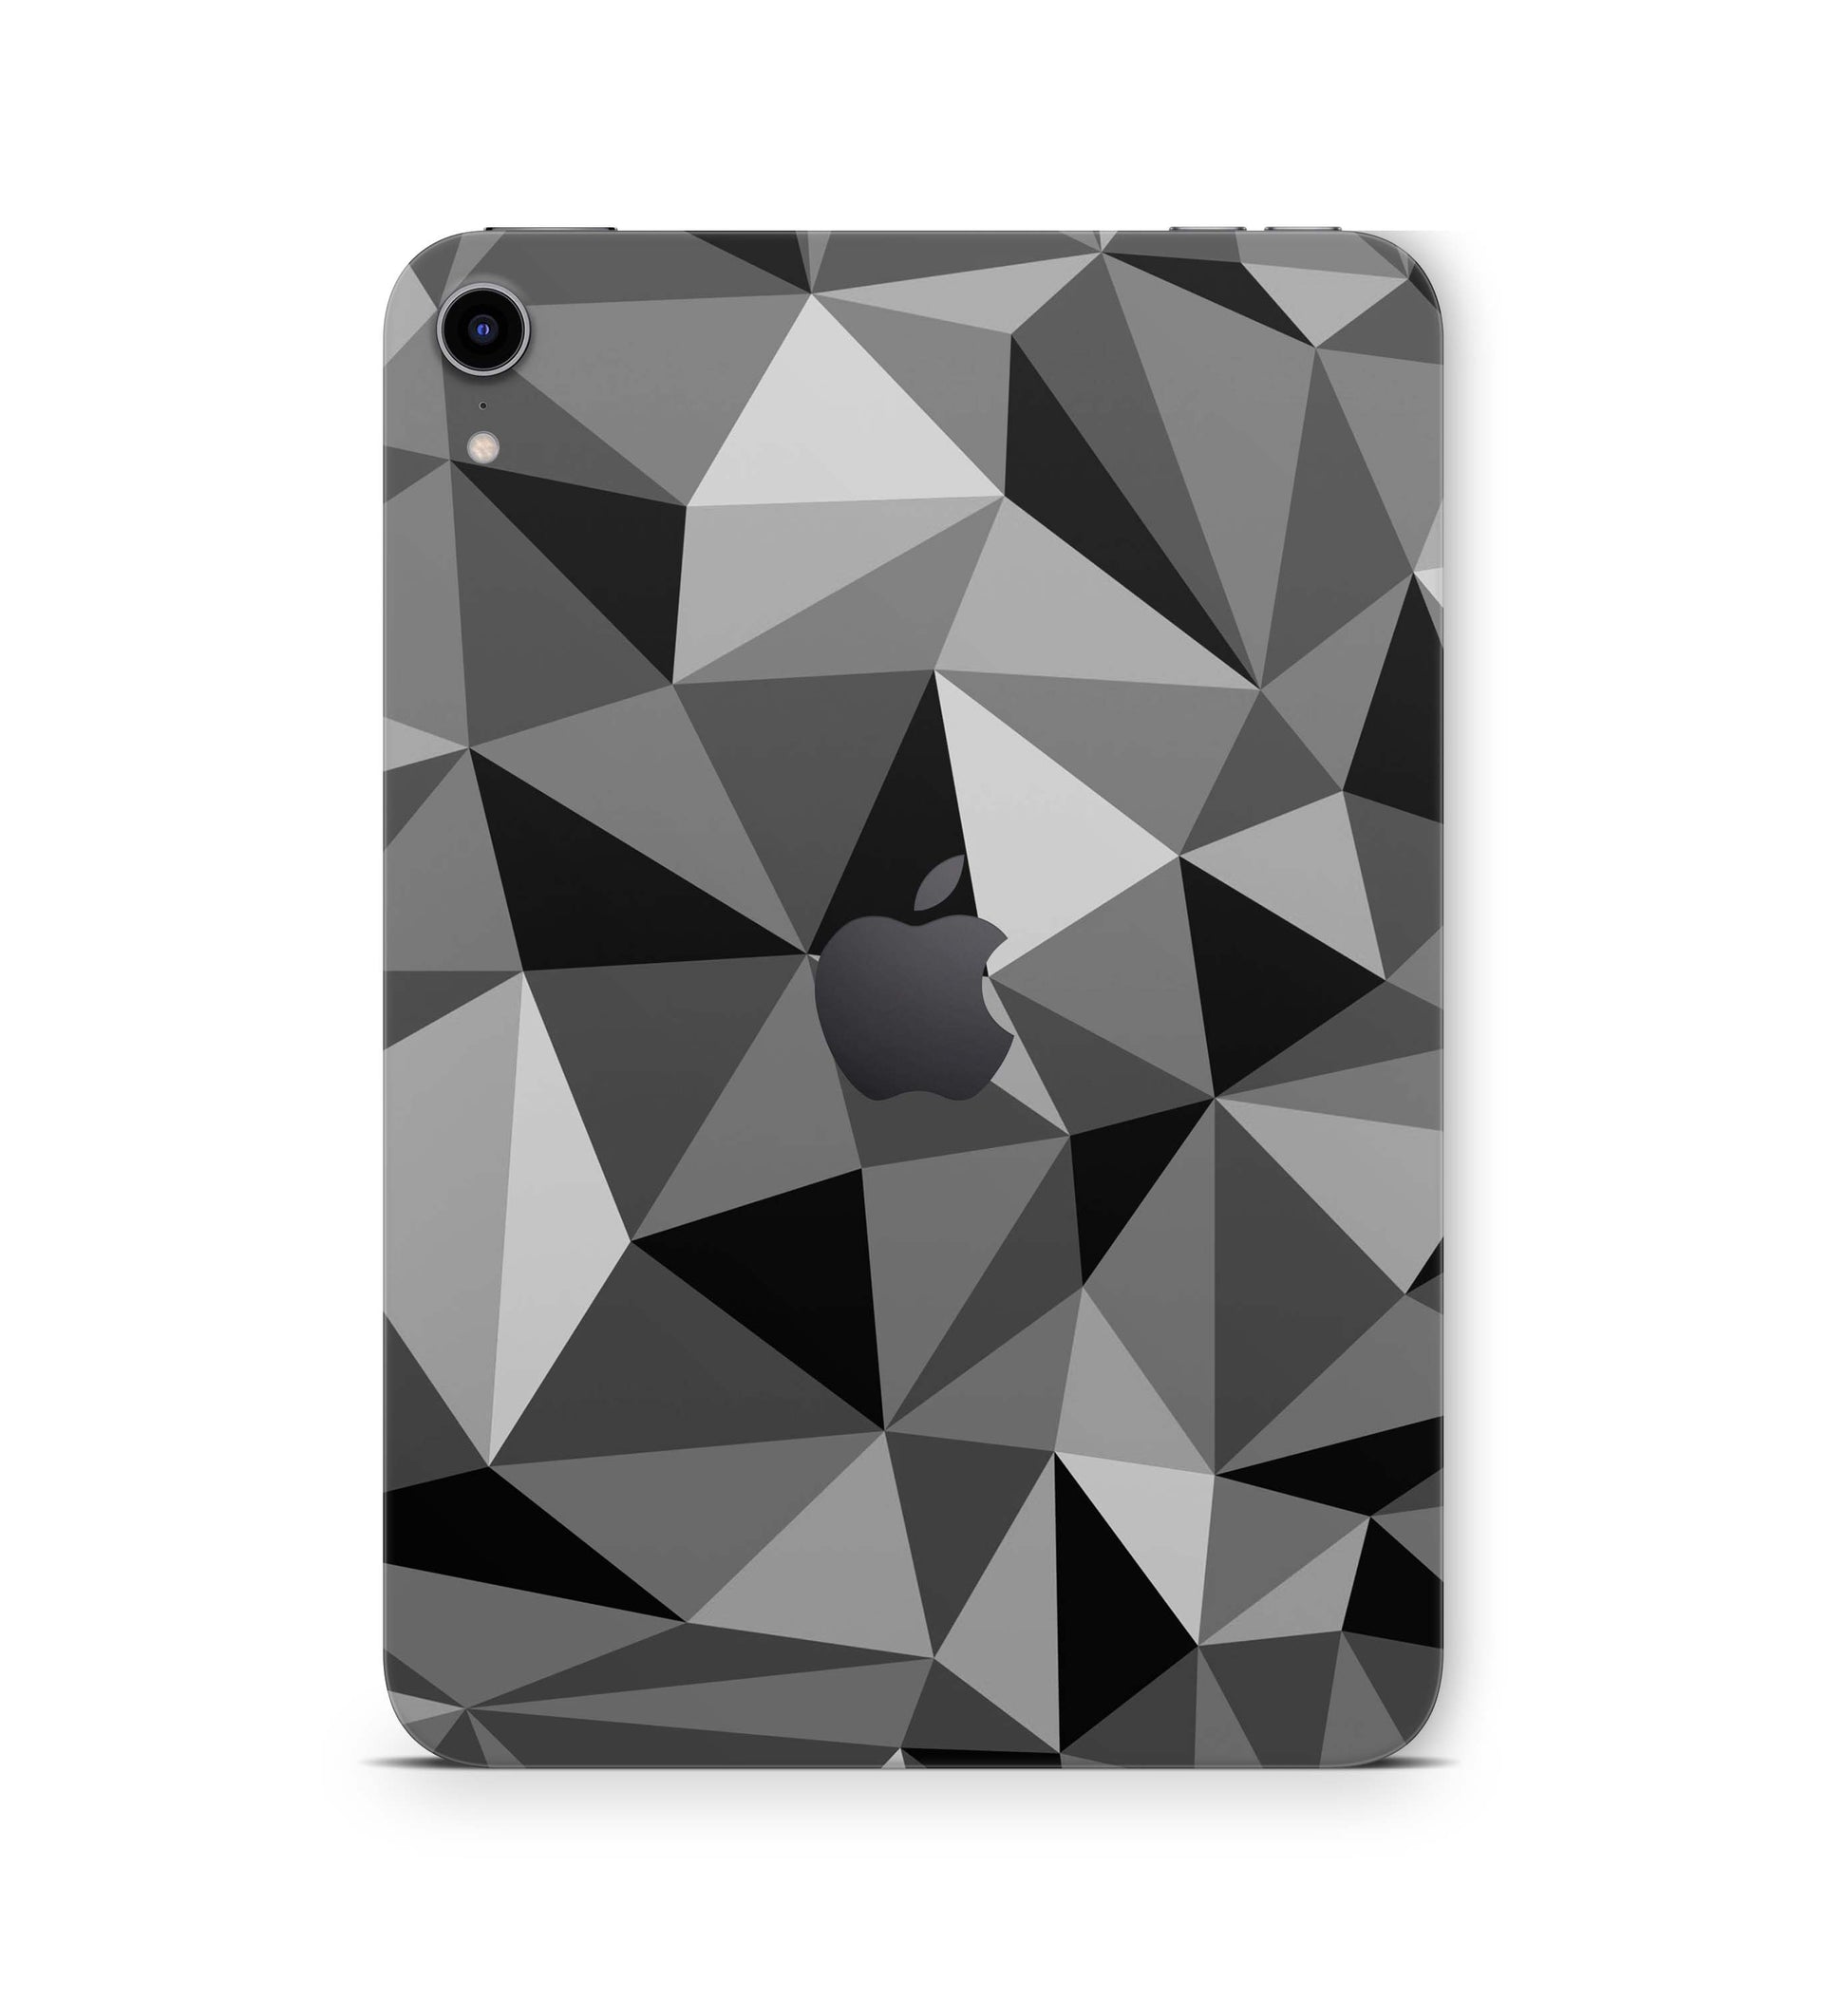 iPad Air Skin Design Cover Folie Vinyl Skins & Wraps für alle iPad Air Modelle Aufkleber Skins4u Polygrey  